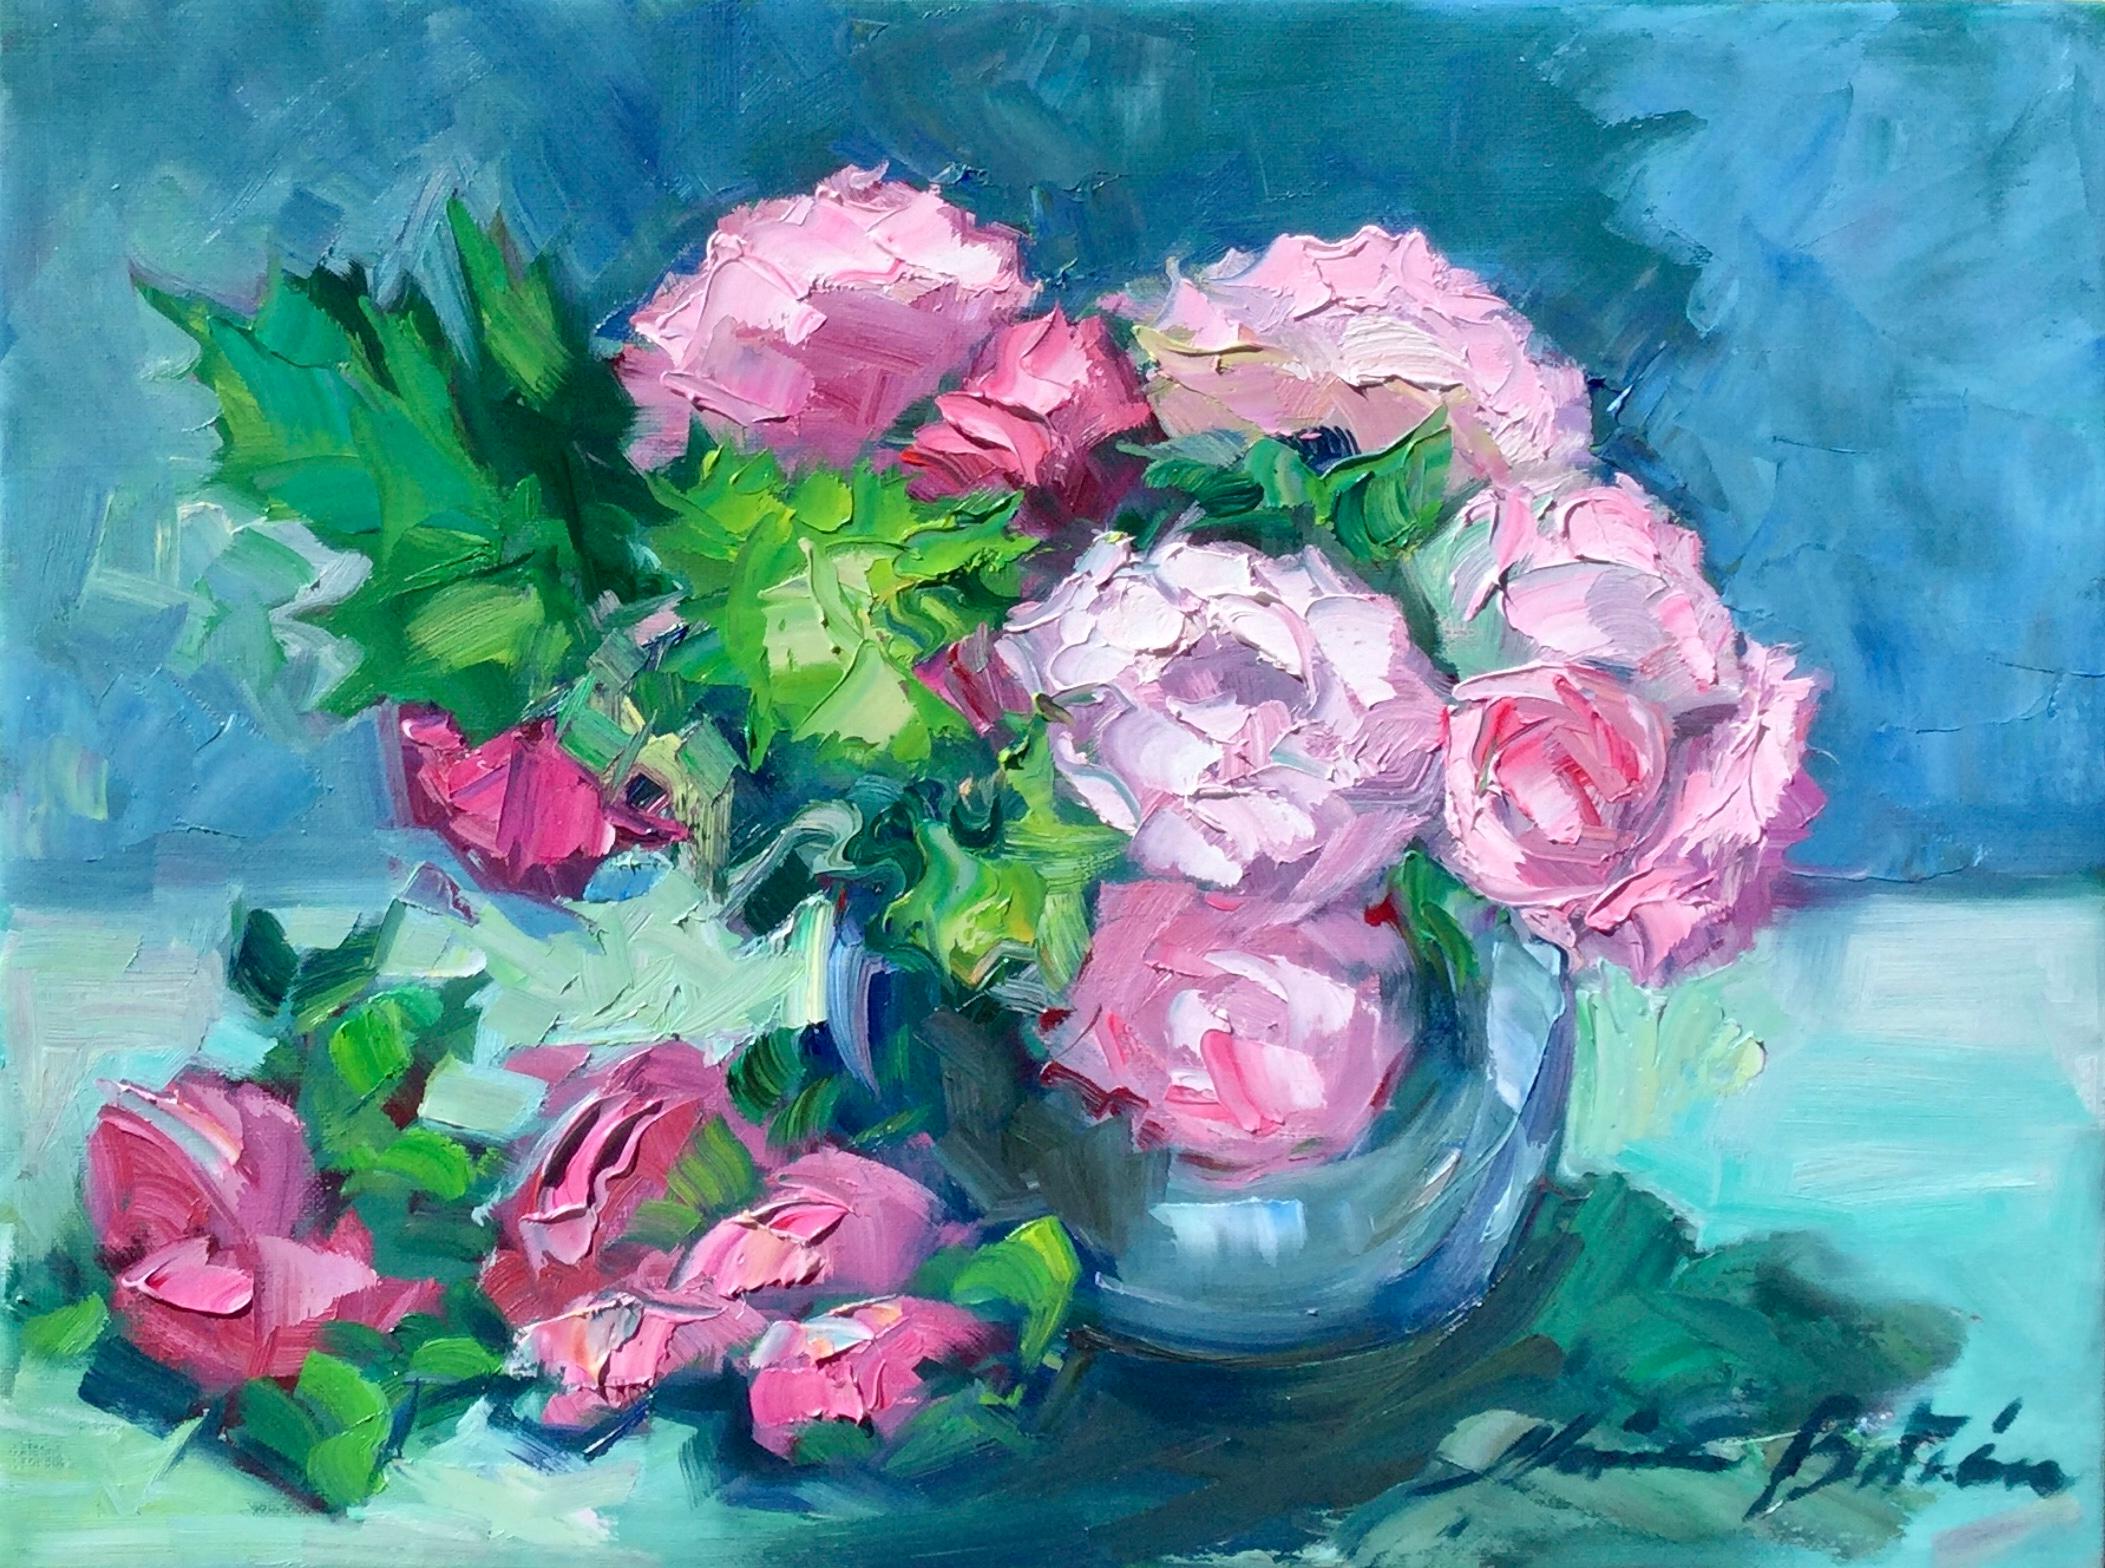 Still-Life Painting Maria Bertrán - Nature morte impressionniste contemporaine roses de jardin rose 